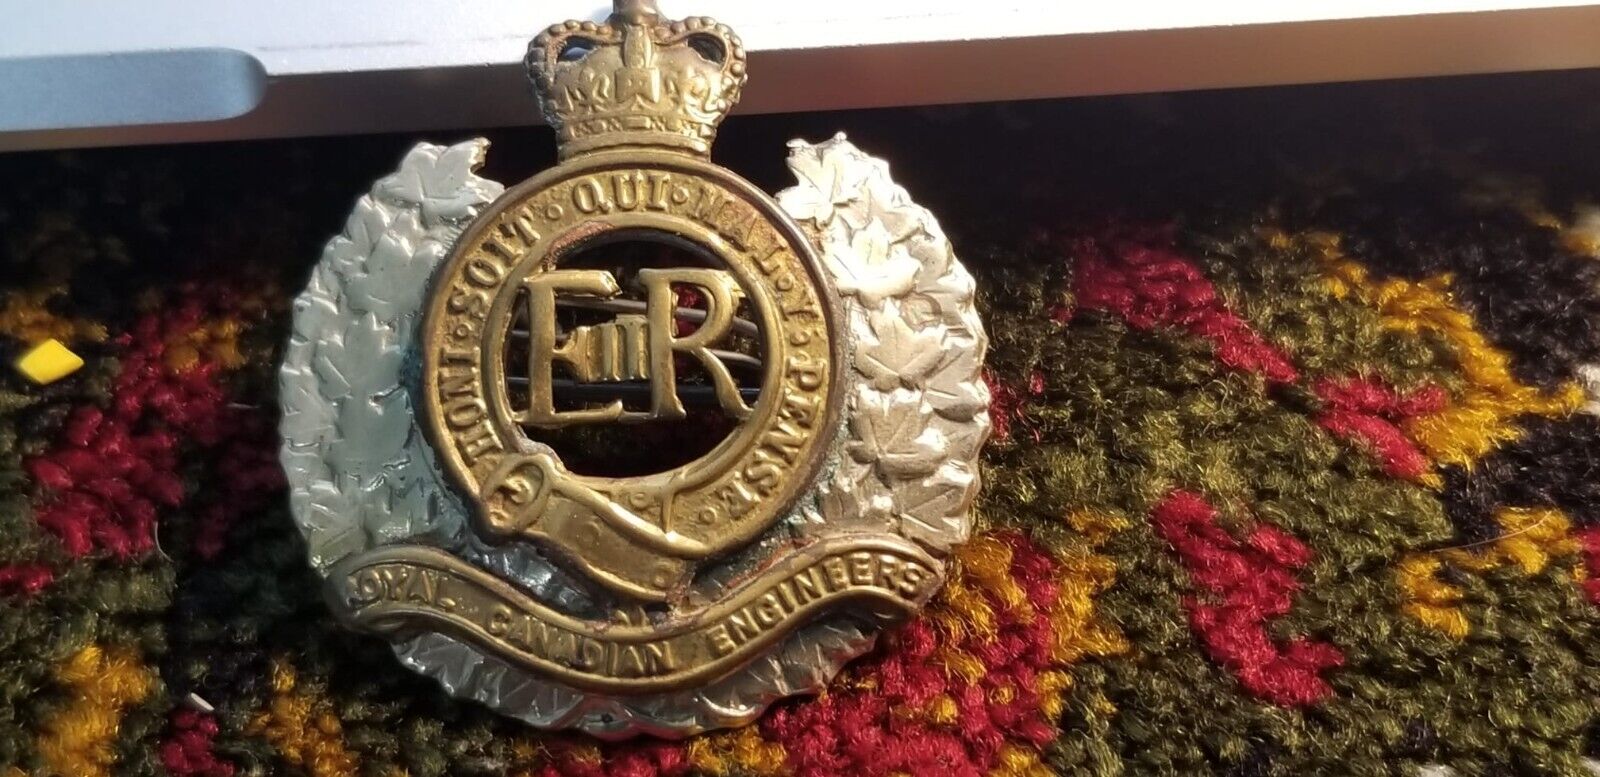 (Canada) the Royal Canadian Engineers – Queen’s Crown Bi-metal Cap Badge.